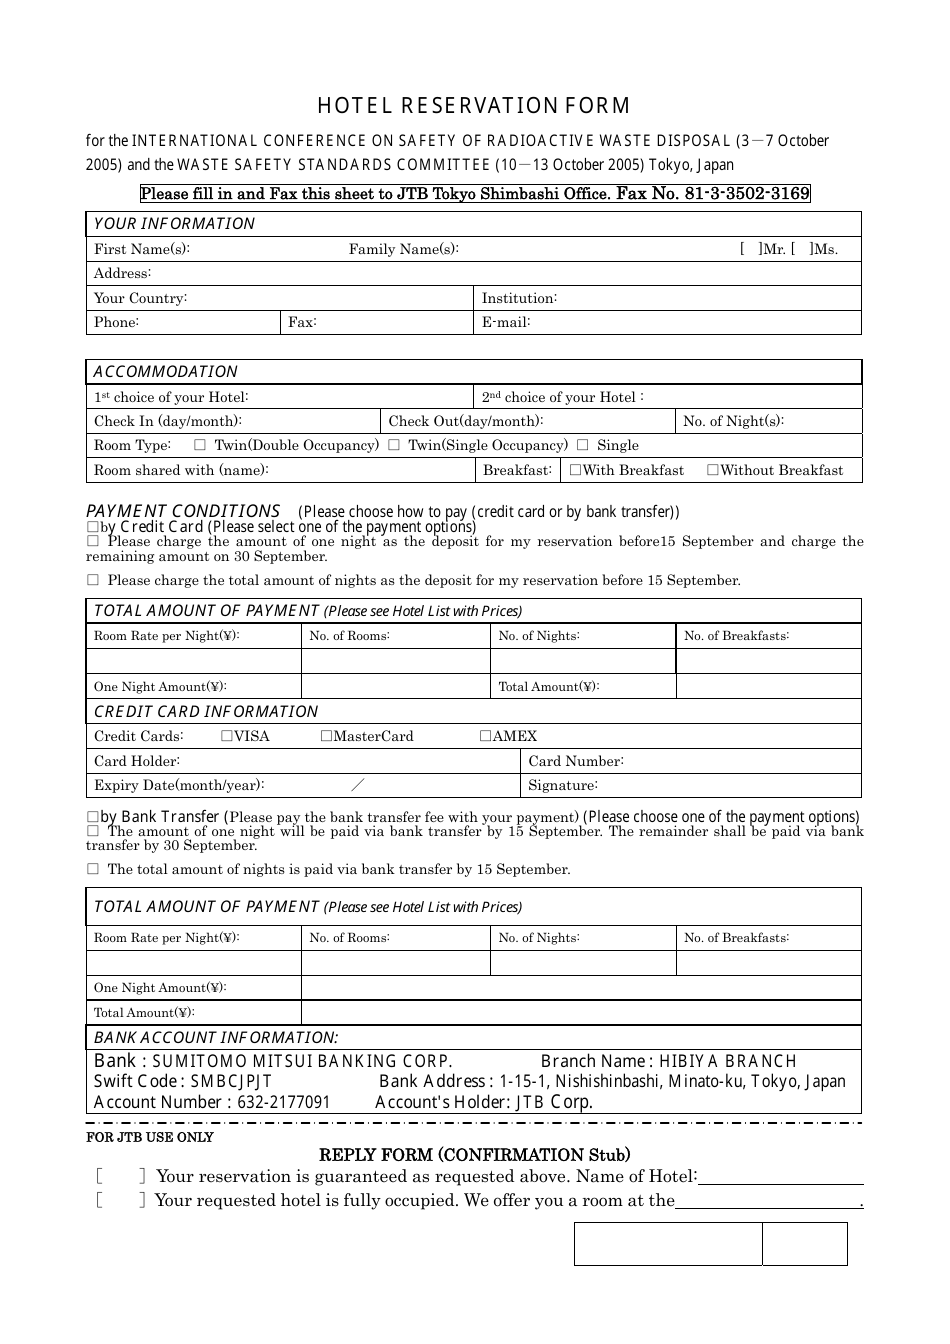 Sample Hotel Reservation Form, Page 1